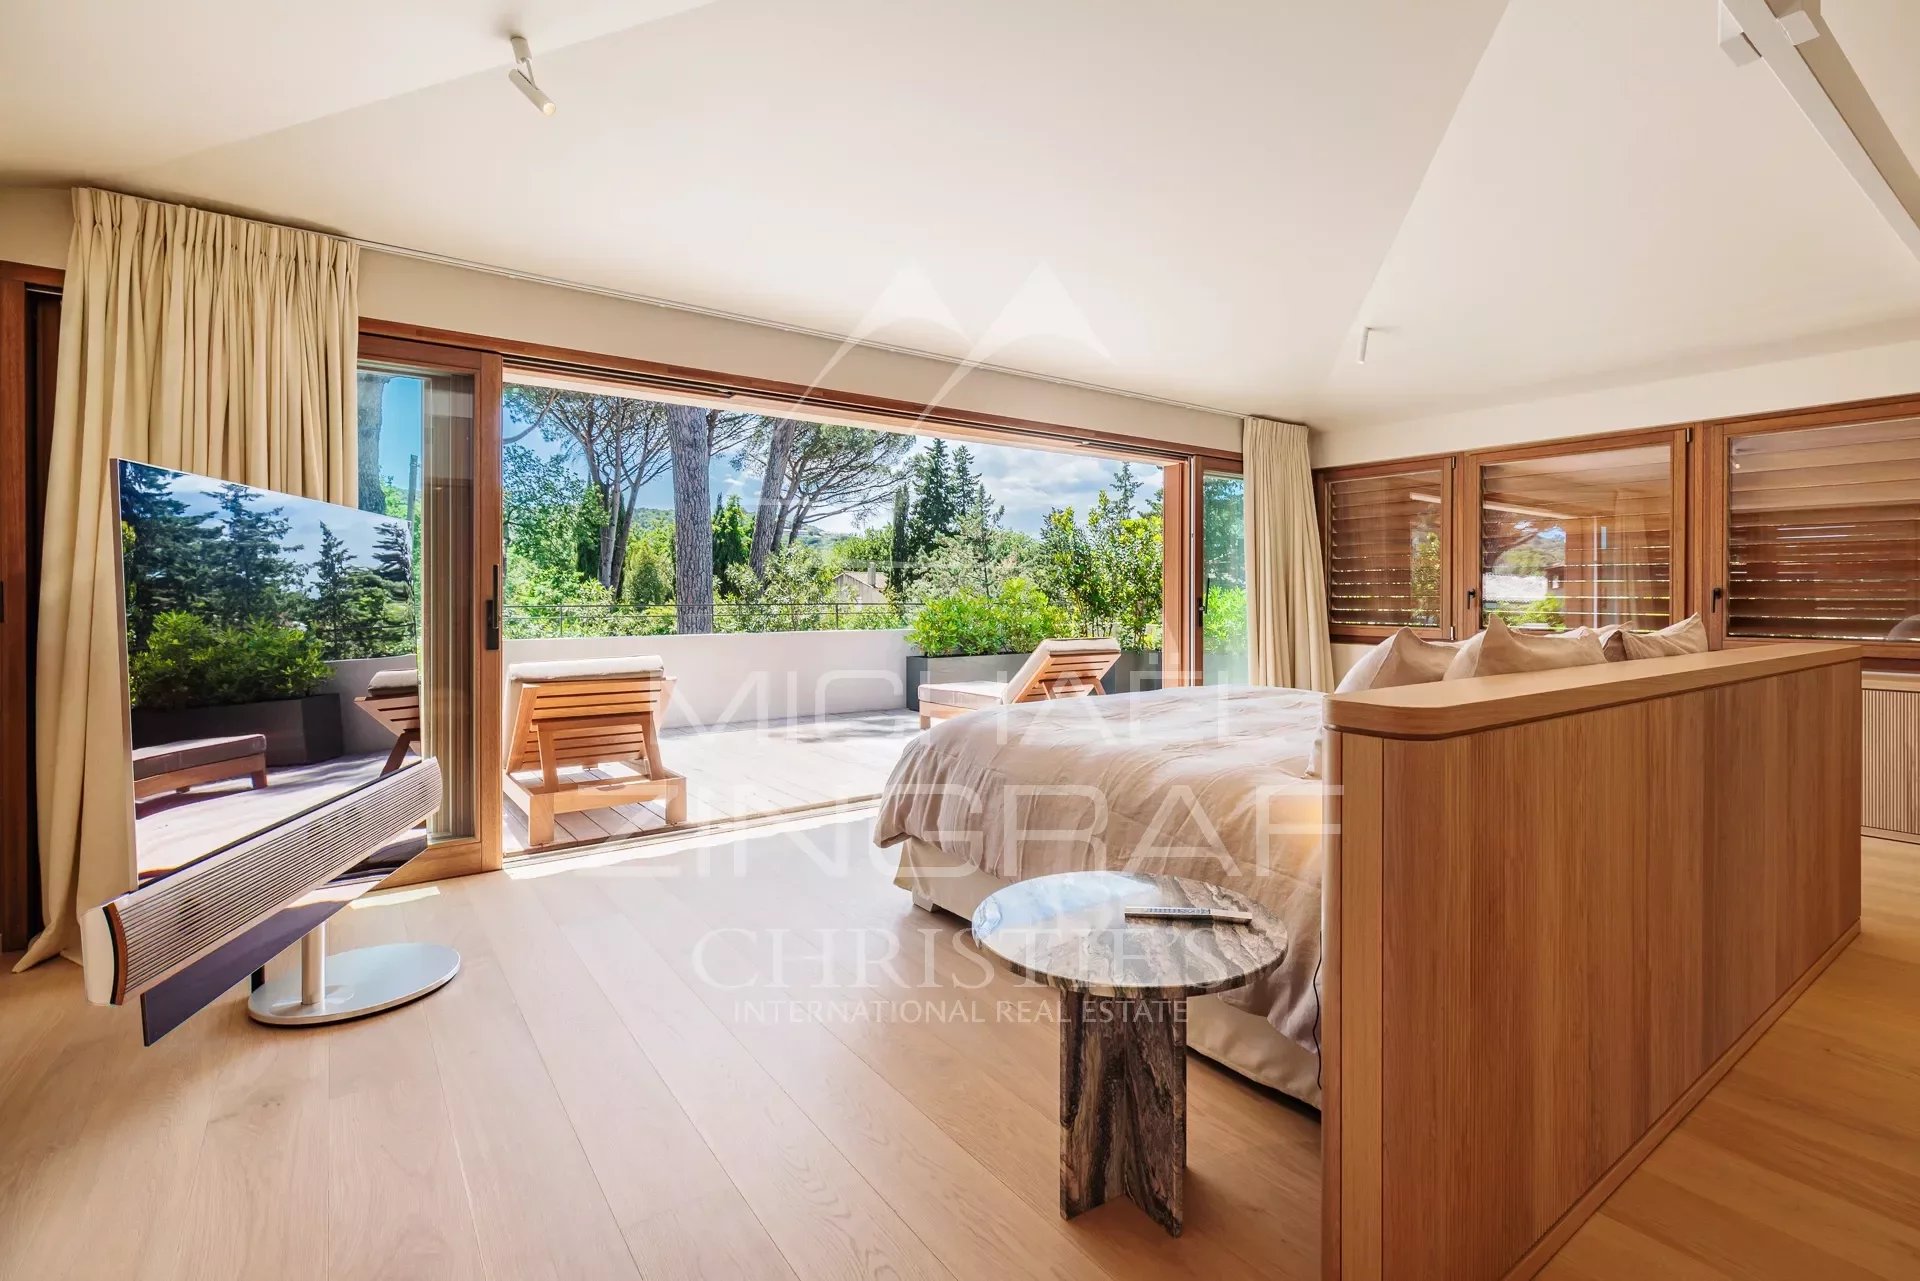 Saint-Tropez - Elegant new villa